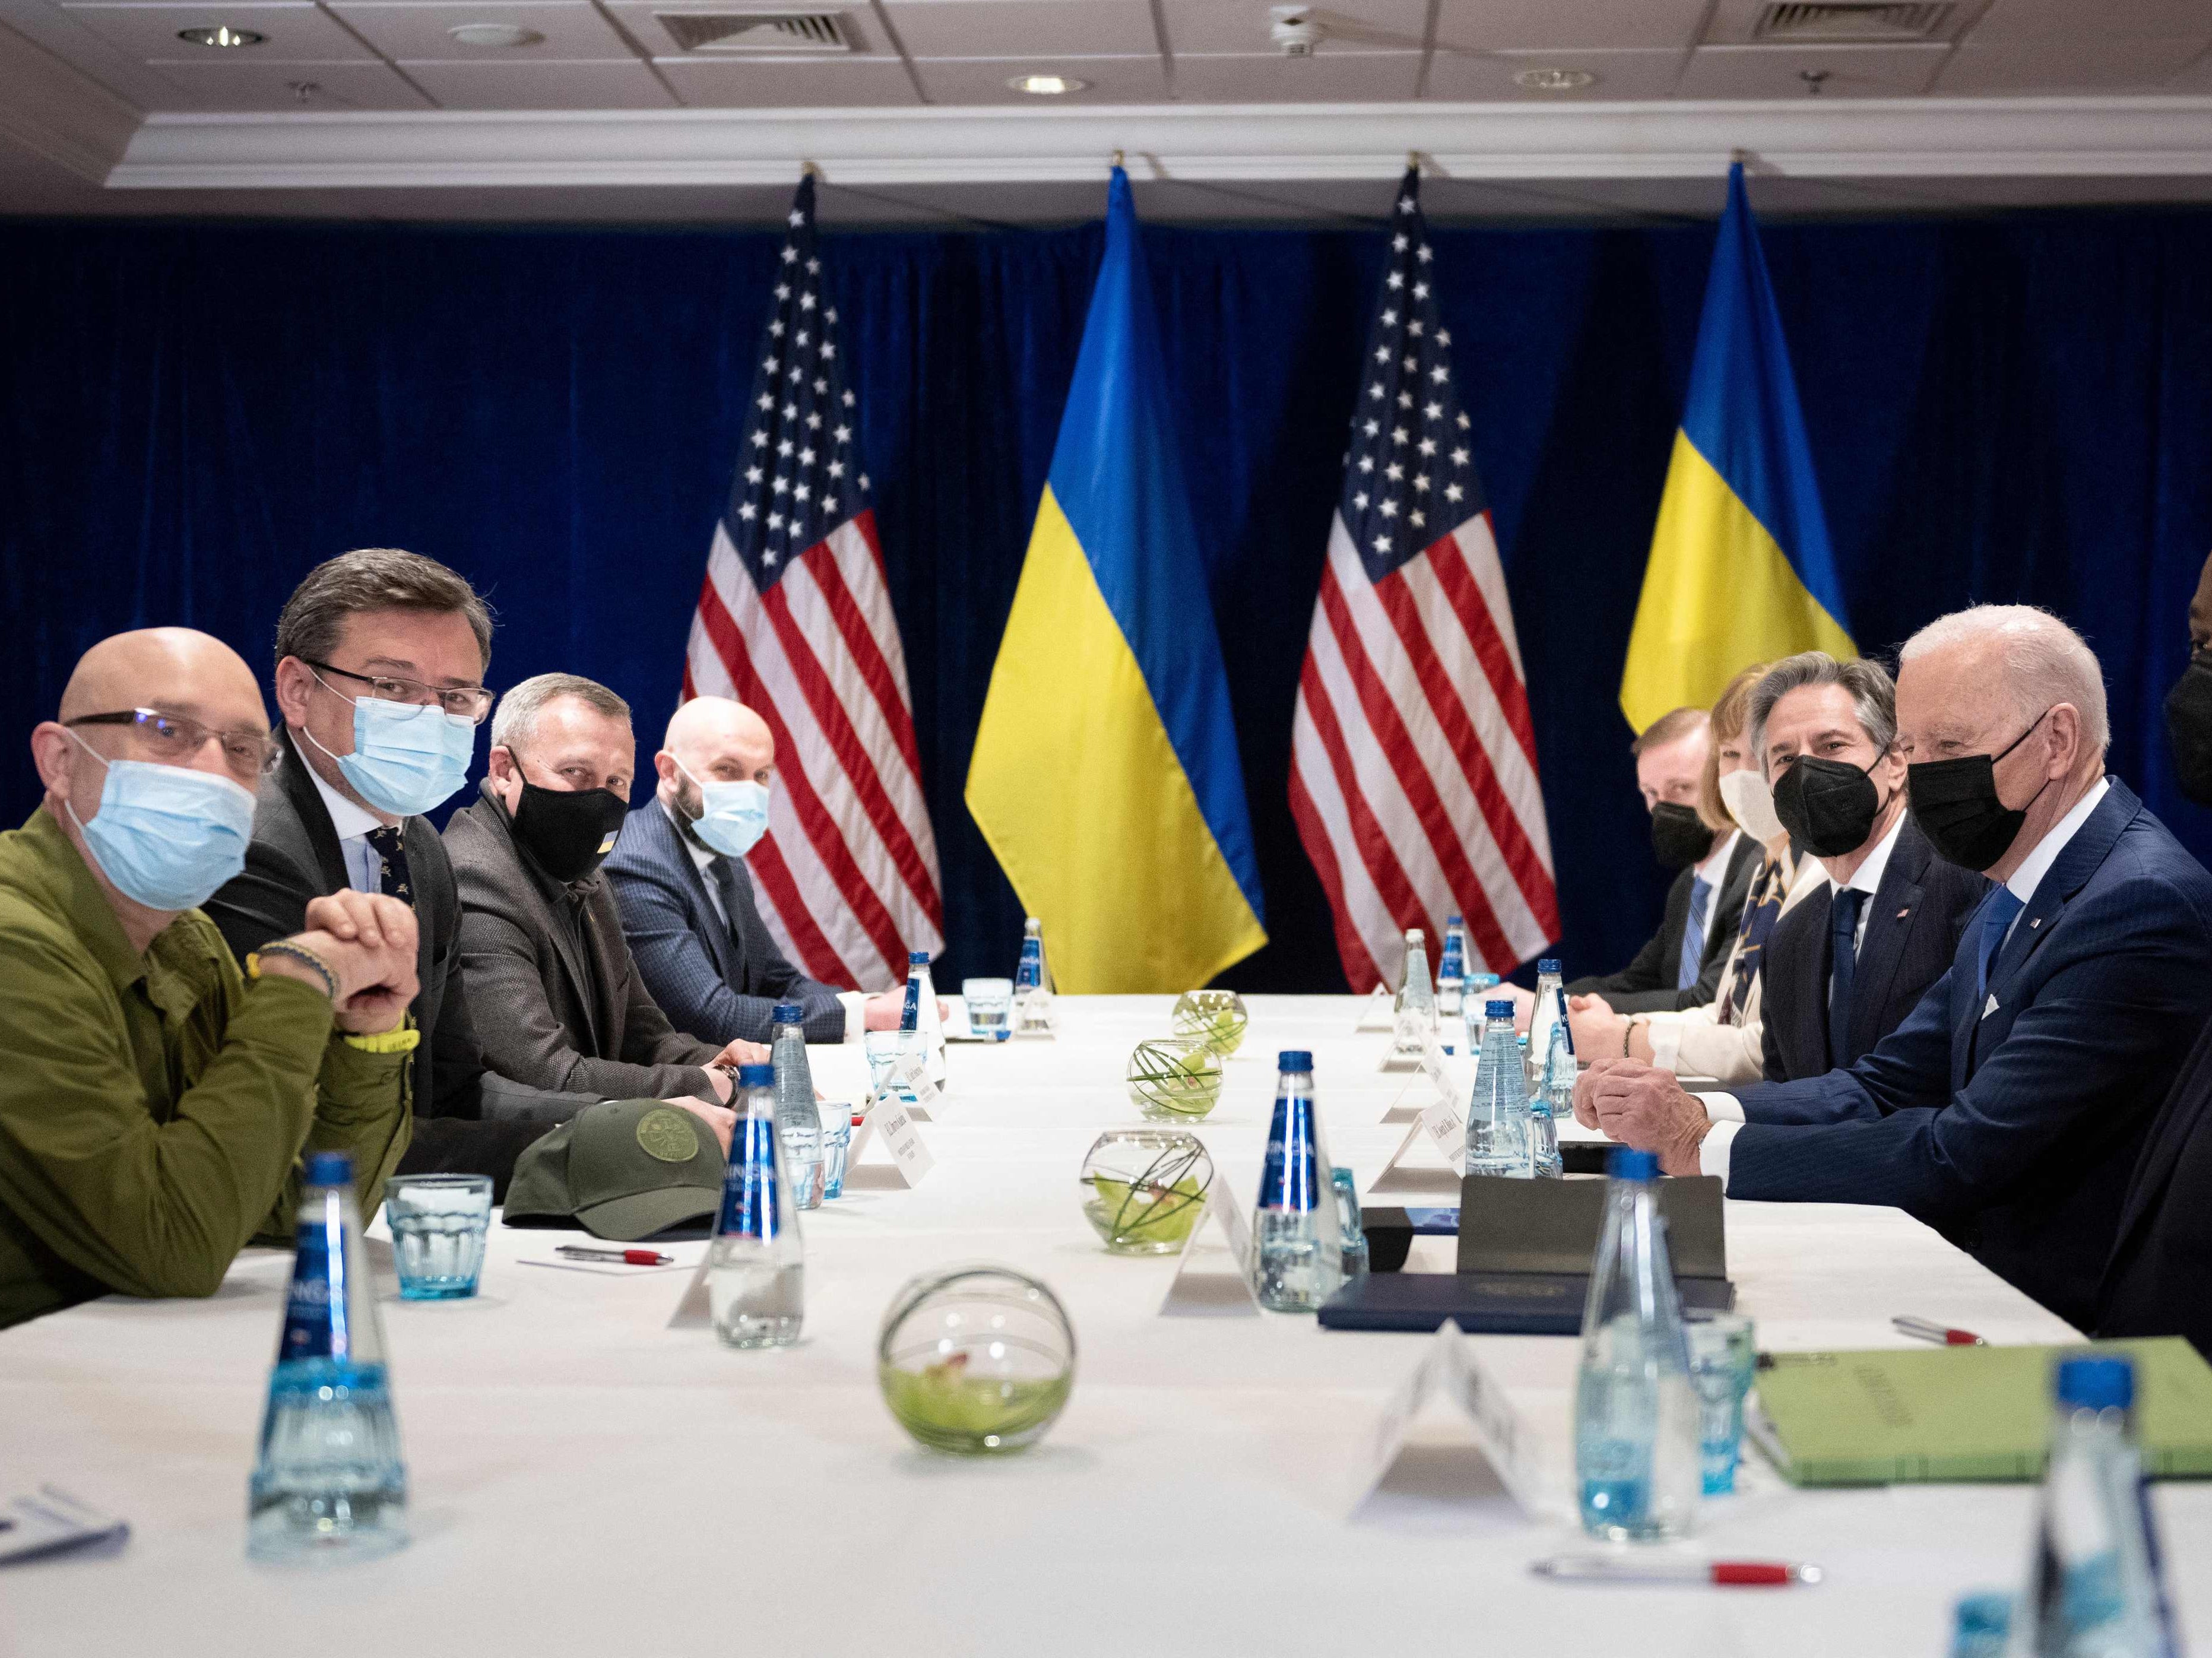 President Biden (right) and US secretary of state Antony Blinken (second right) meet with Ukrainian foreign minister Dmytro Kuleba (second left) and defence minister Oleksii Reznikov (left) in Warsaw